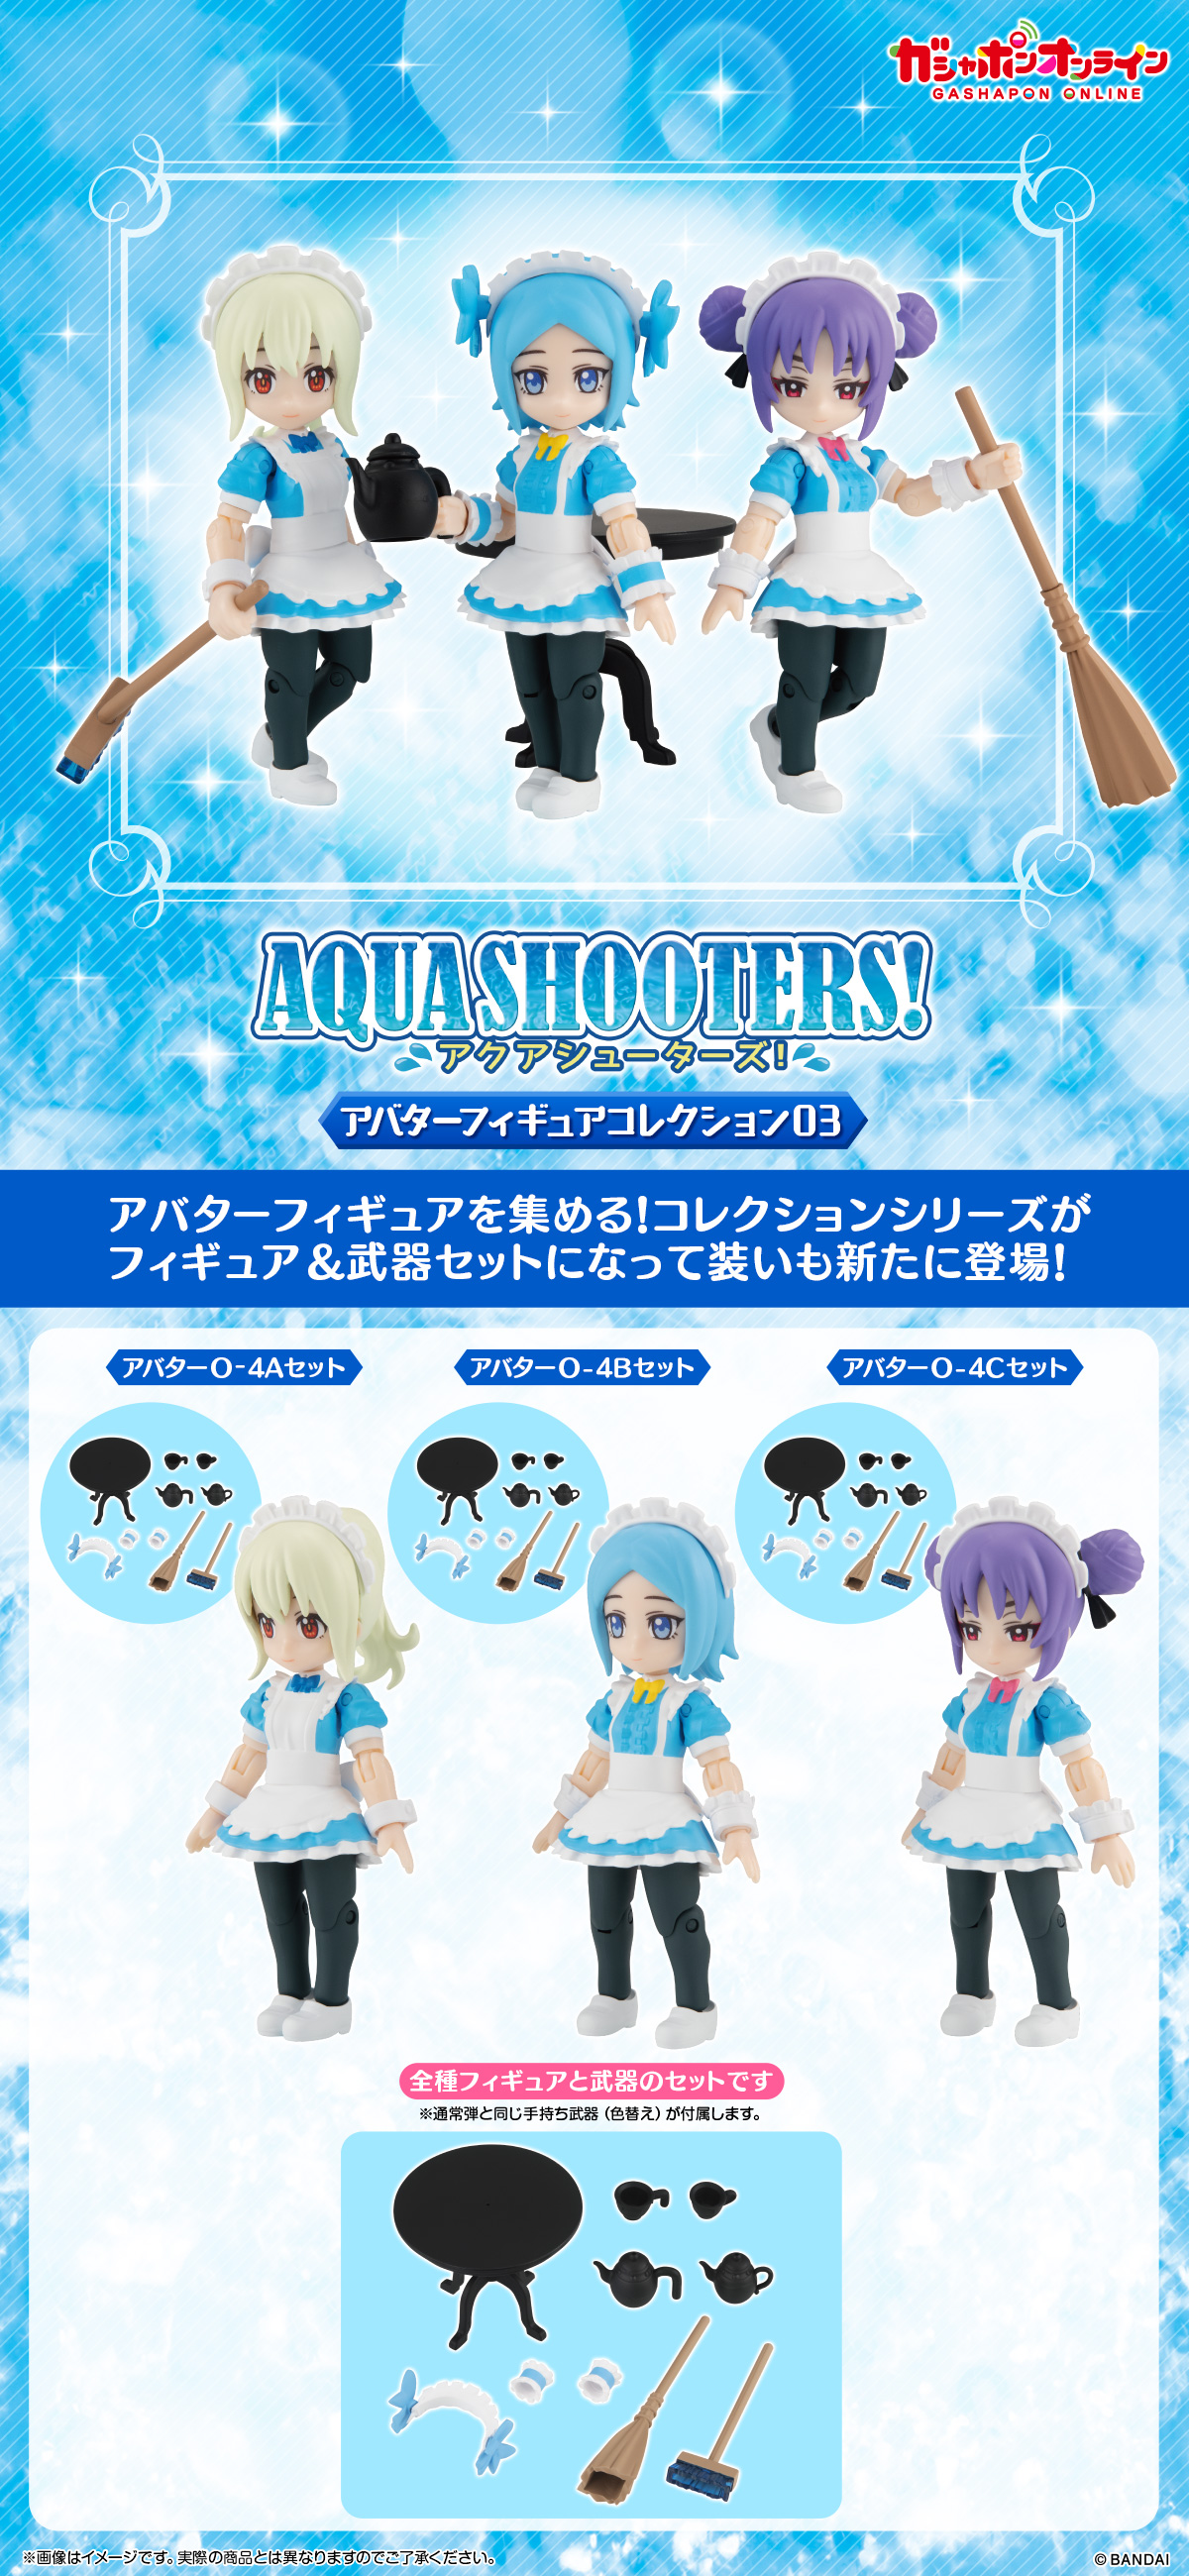 AQUA SHOOTERS! アバターフィギュアコレクション03 | ナムコパークス ...